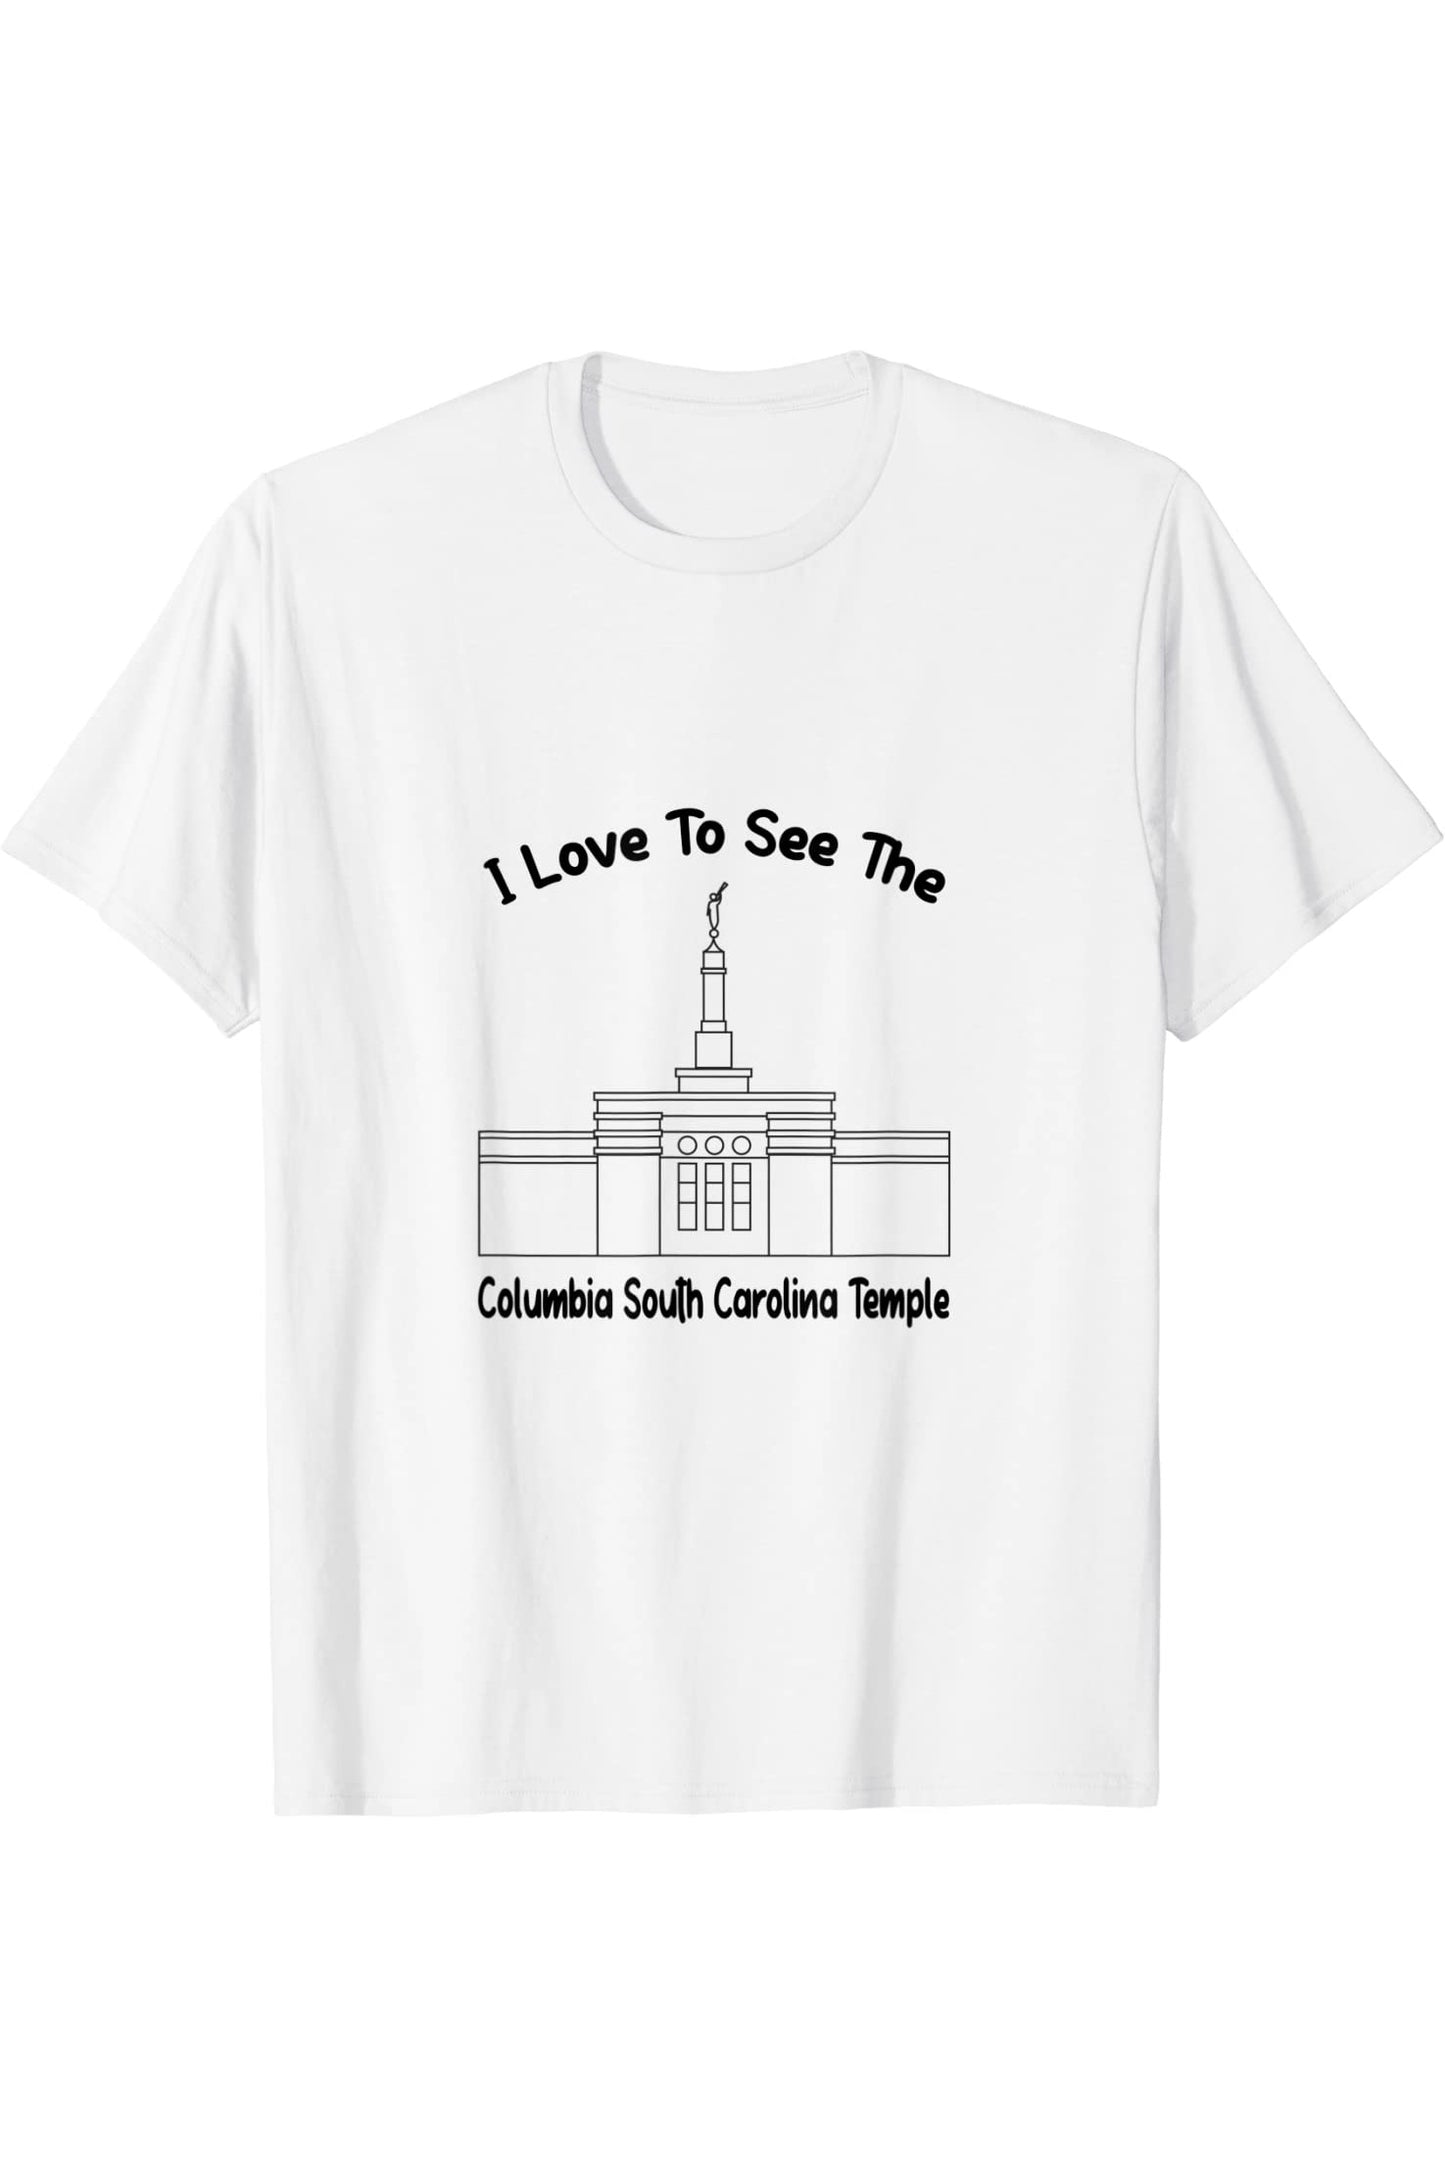 Columbia South Carolina Temple T-Shirt - Primary Style (English) US